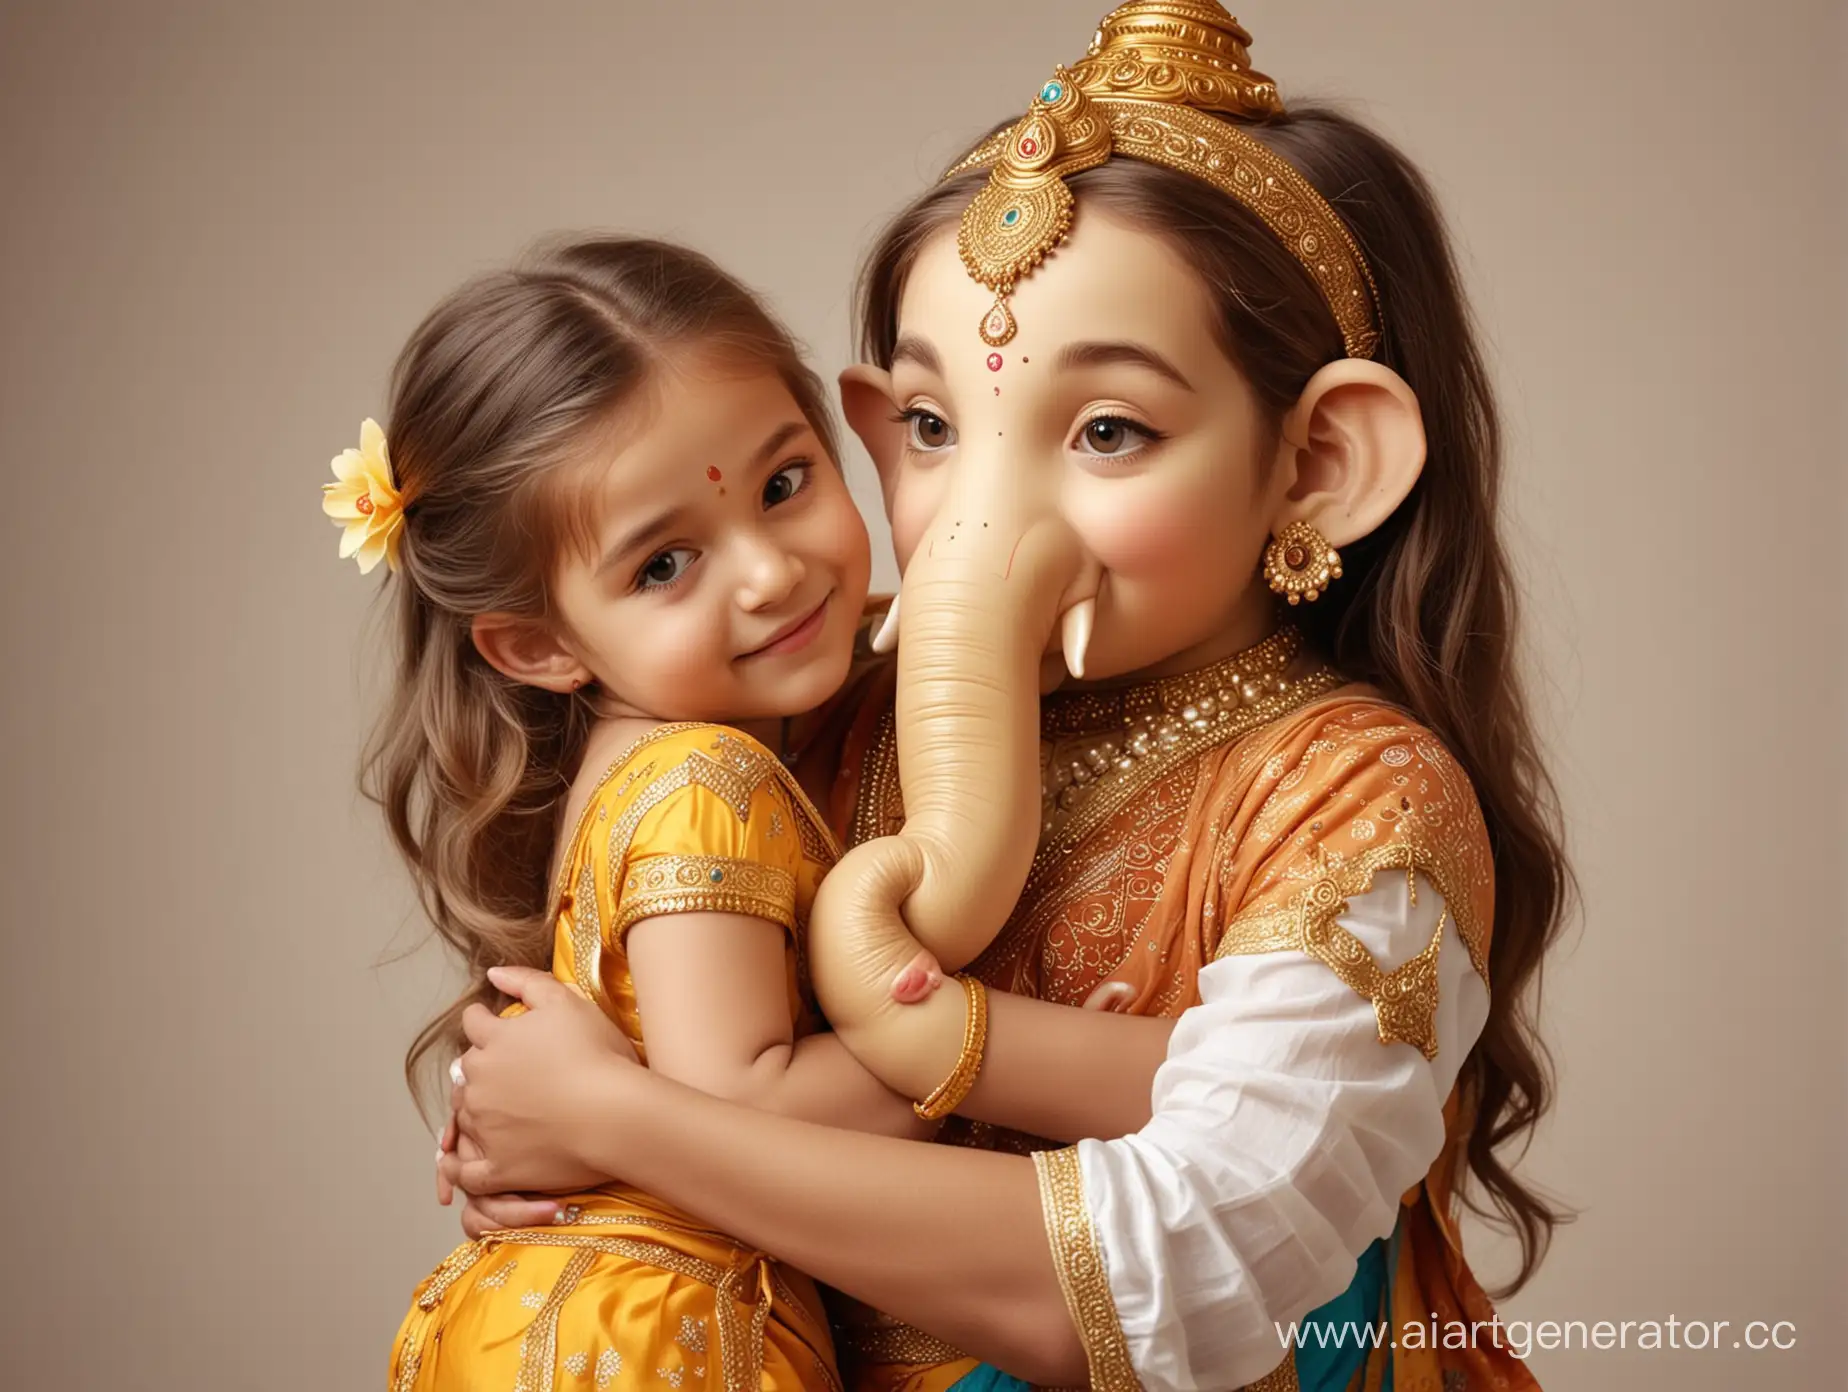 Girl-Embracing-Joyful-Lord-Ganesha-Expressive-4K-Photography